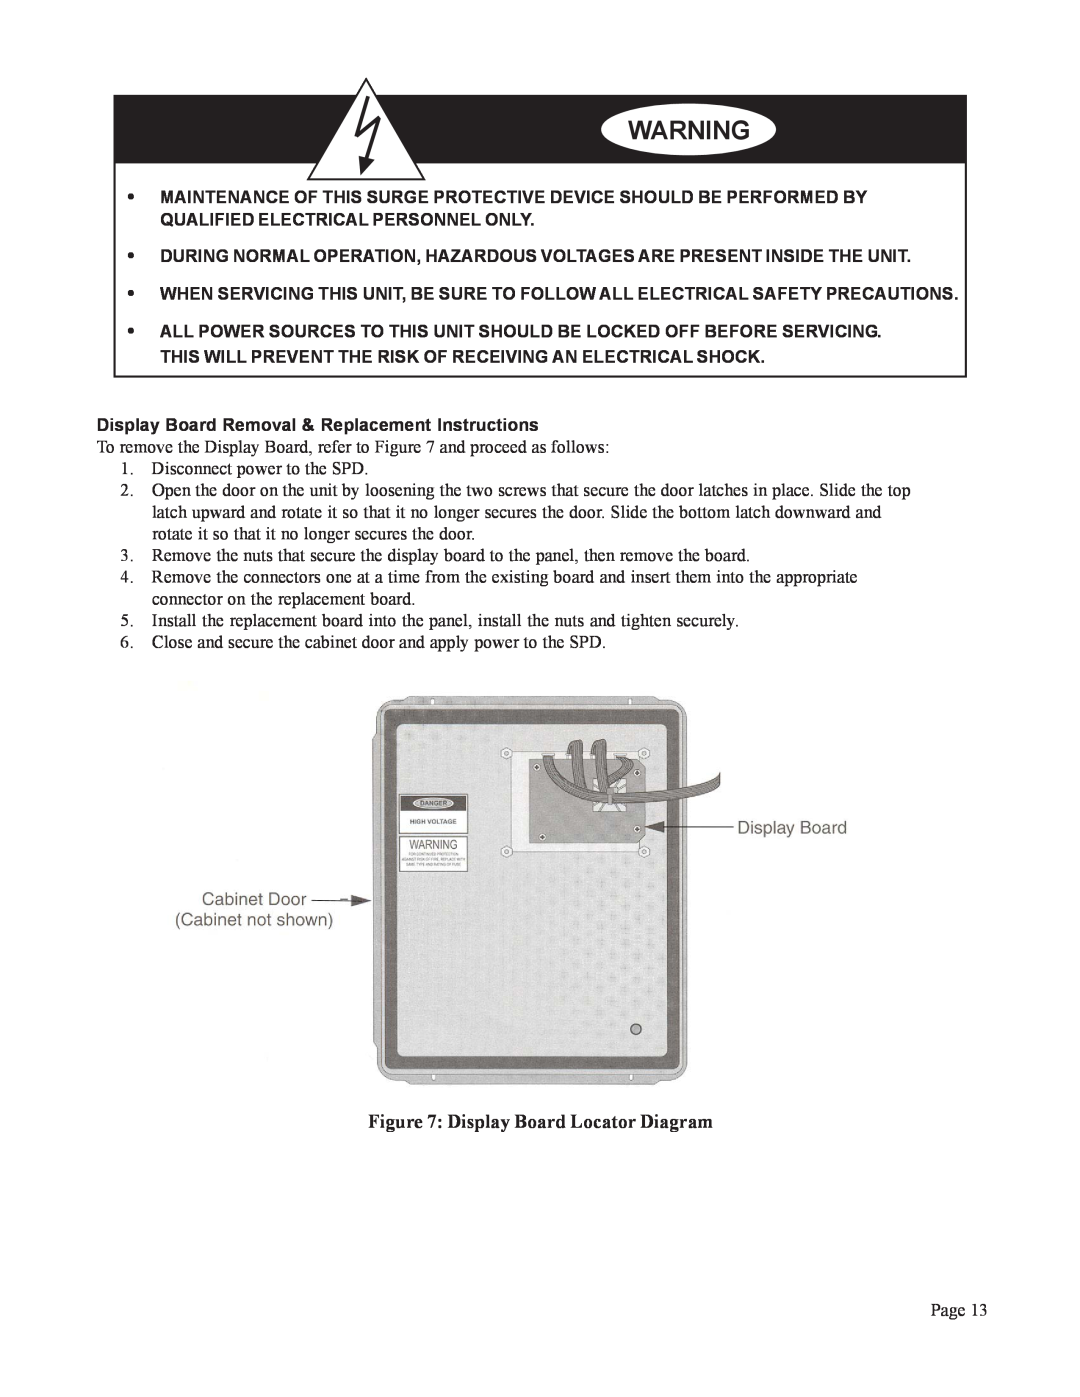 American Power Conversion PM3, PM4Y user manual Display Board Locator Diagram 